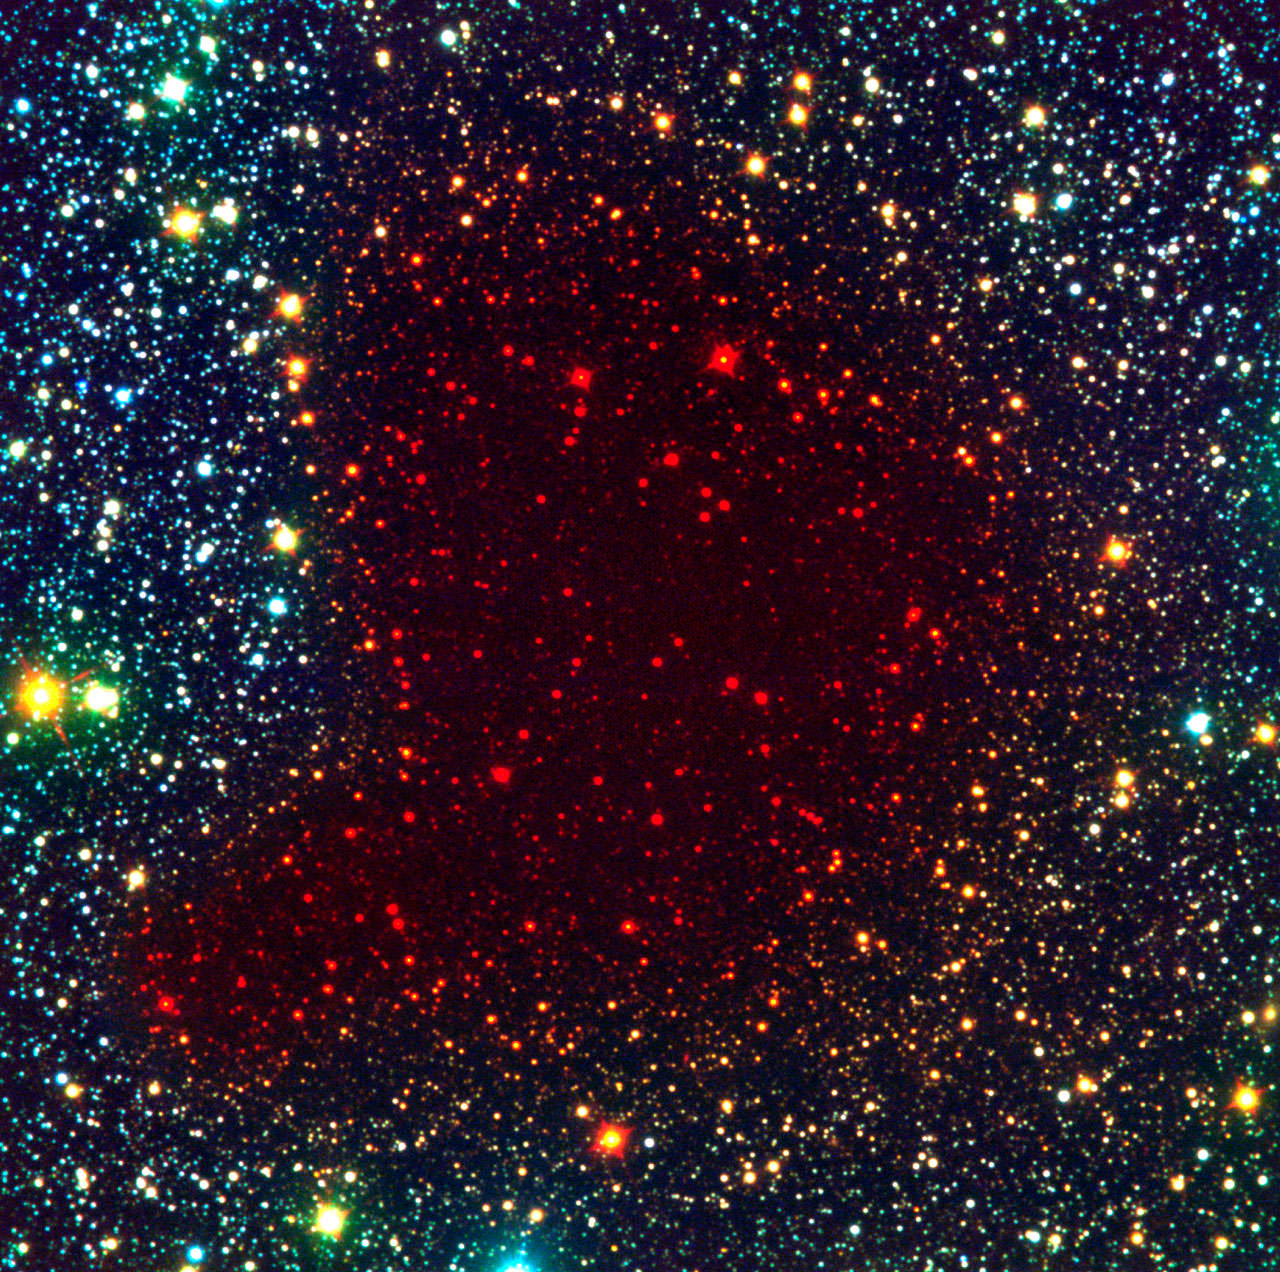 Barnard 68 (Credit: ESO)